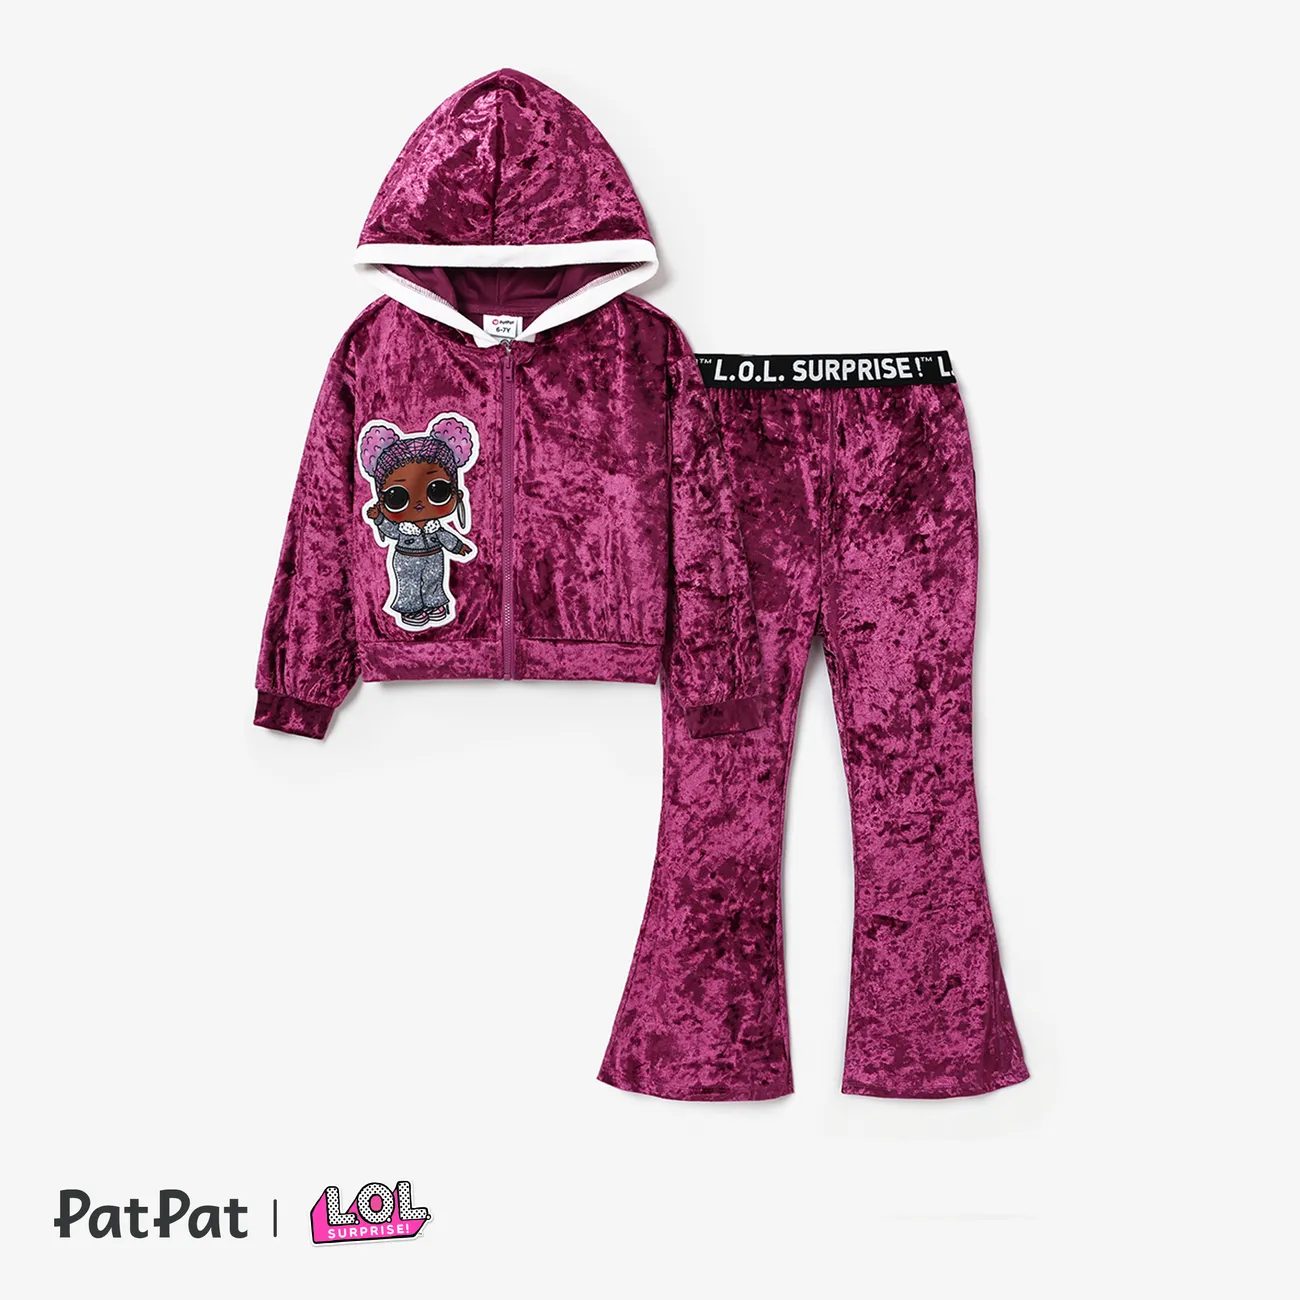 L.O.L. SURPRISE! Kid Girl Graphic Velvet Long-sleeve Hooded Jacket or Bell Pant Hot Pink big image 1